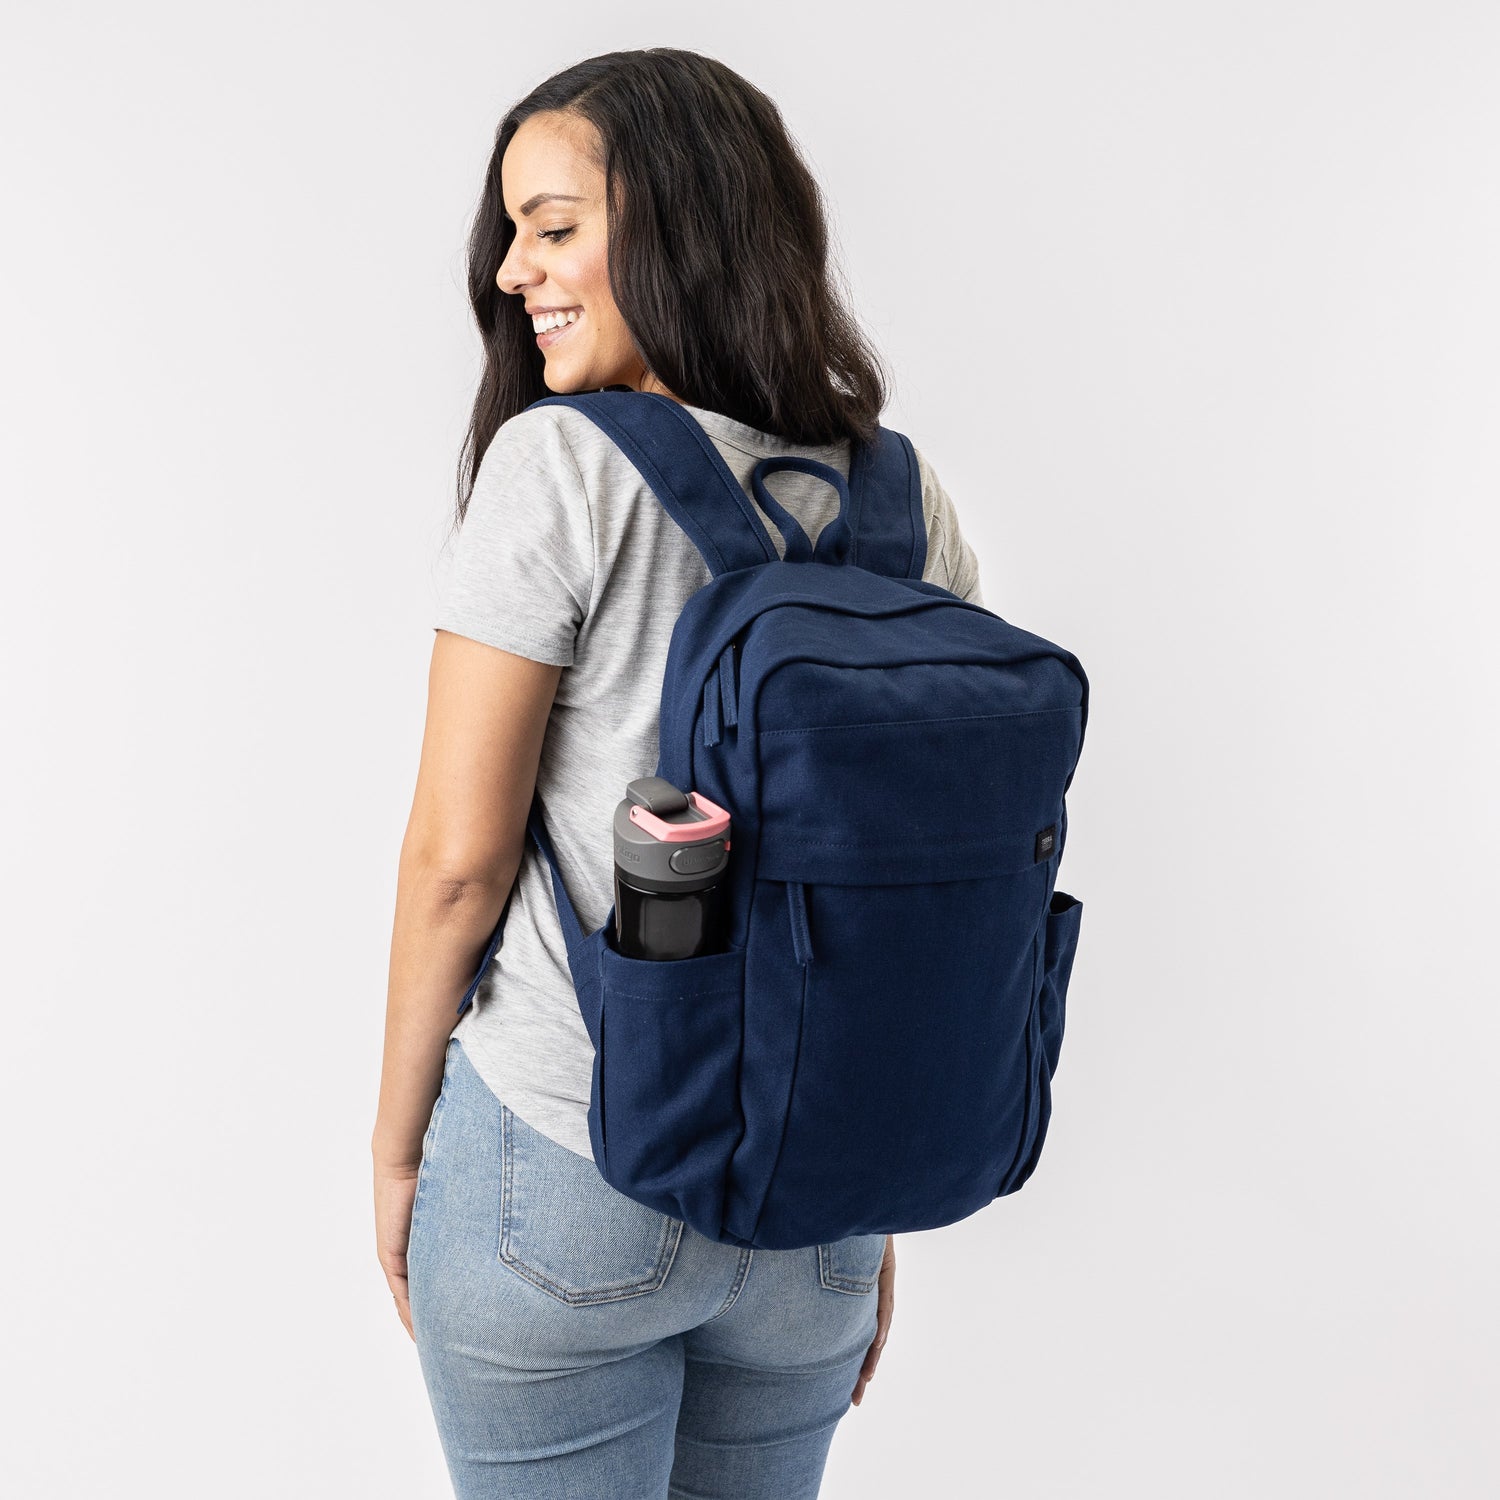 backpack in navy blue